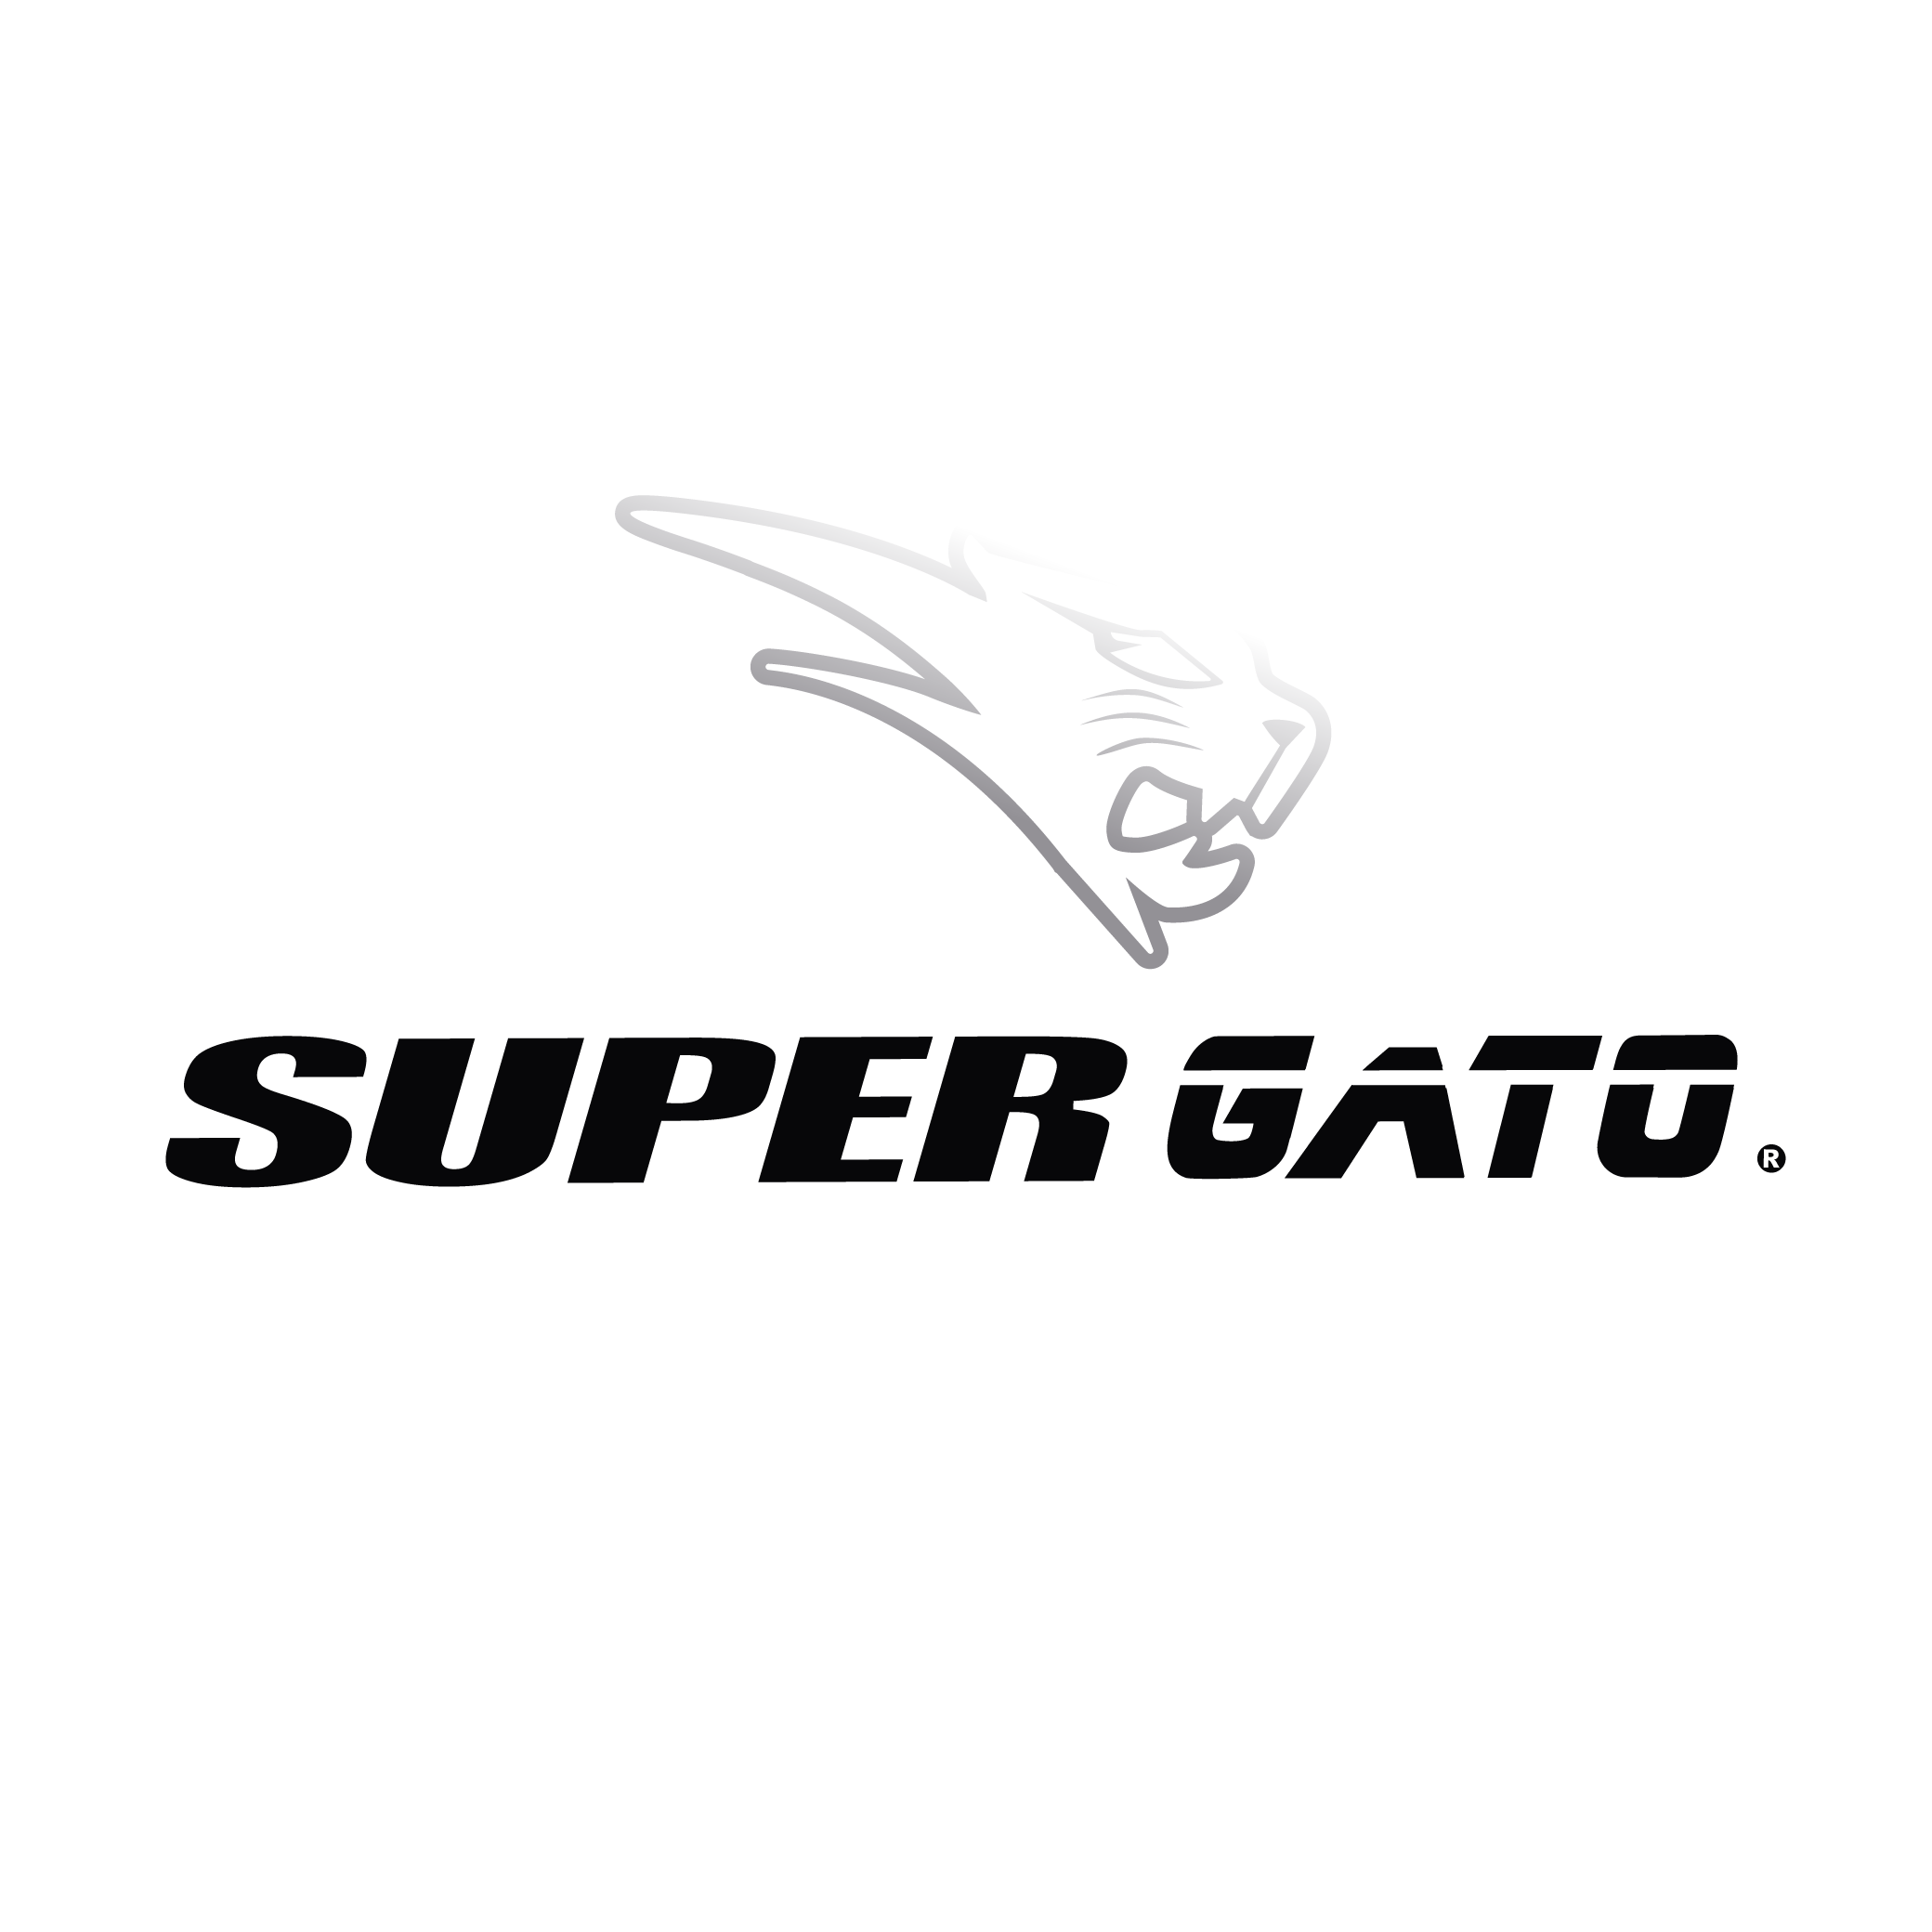 super-gato-logo-png